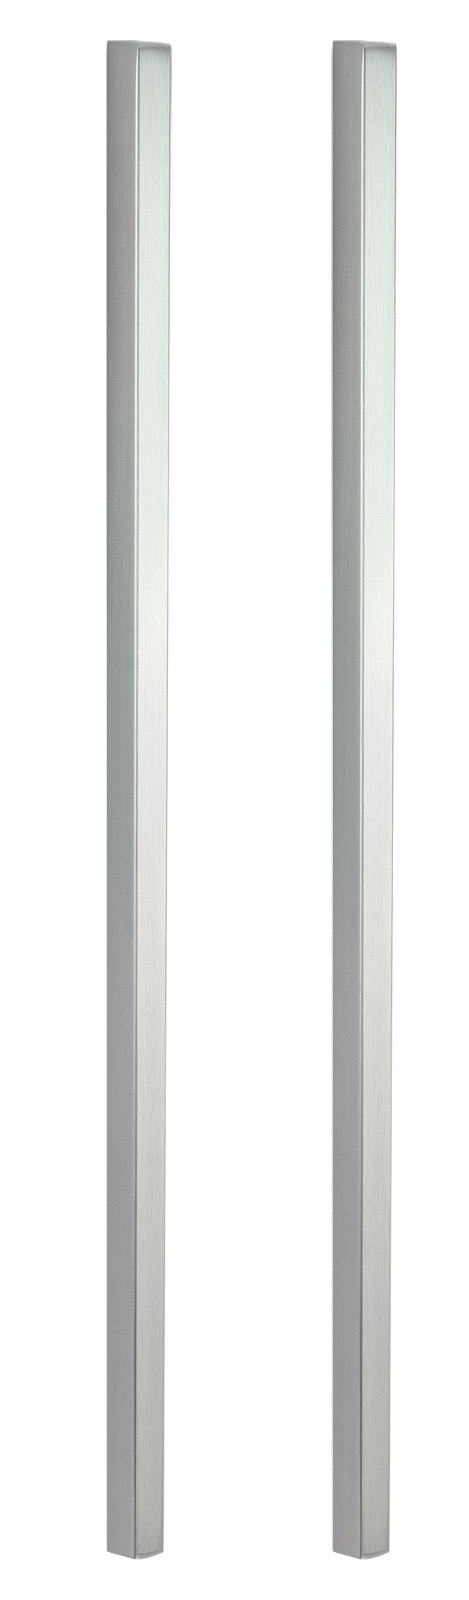 Griffleistenpaar "GL 400" für Glas, klebbar, Edelstahloptik